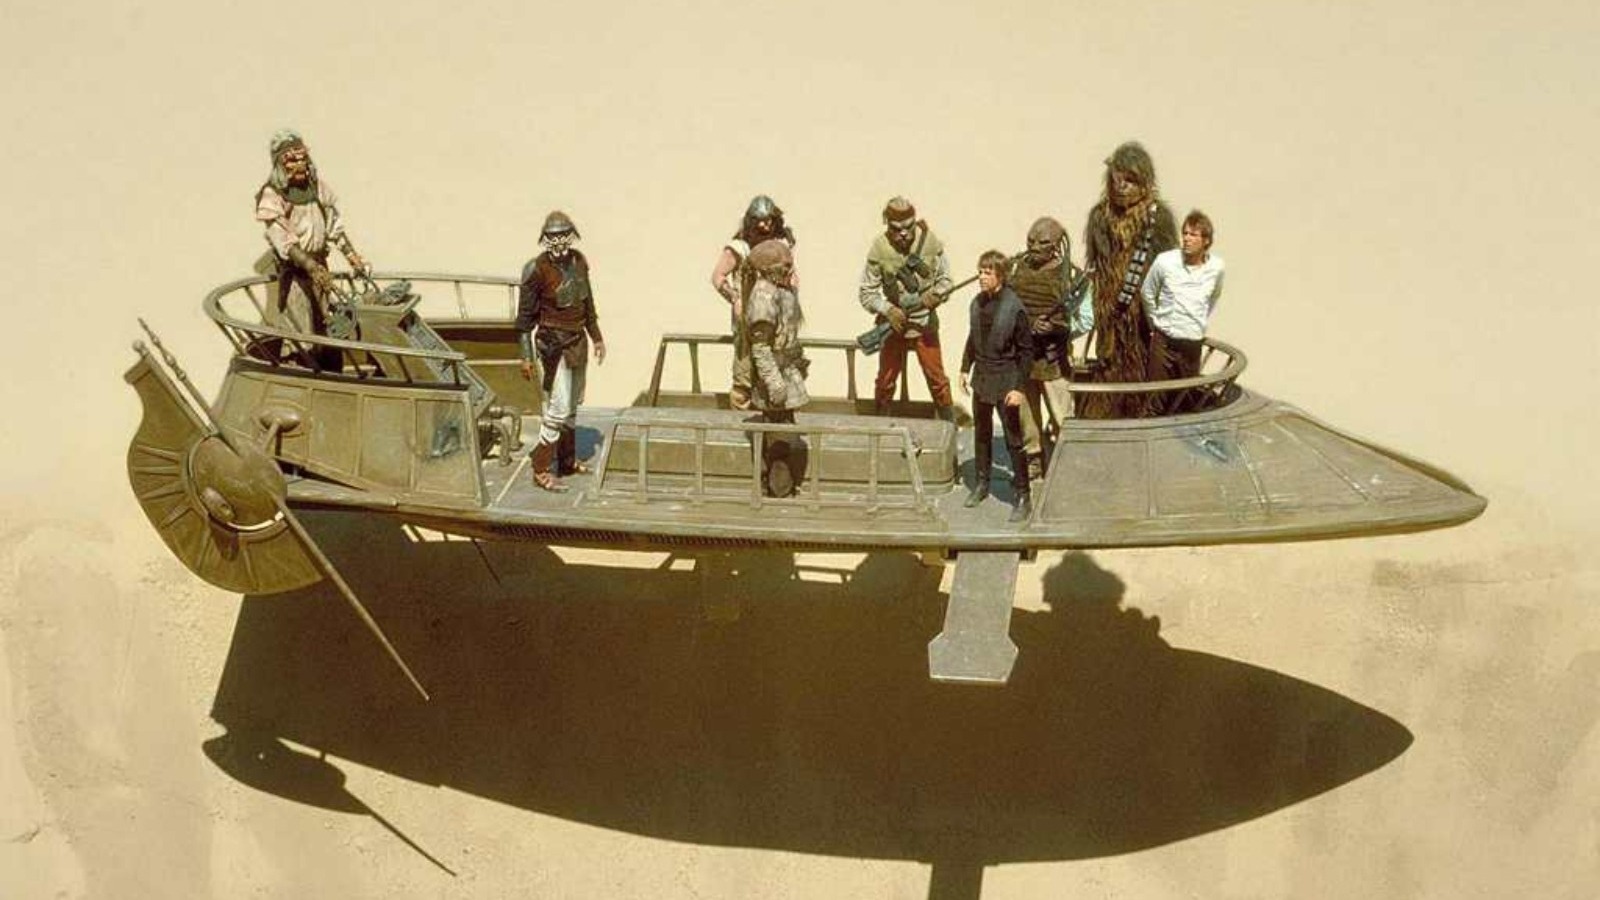 Return of the Jedi crew shared Anakin's attitude towards the movie's fake sand